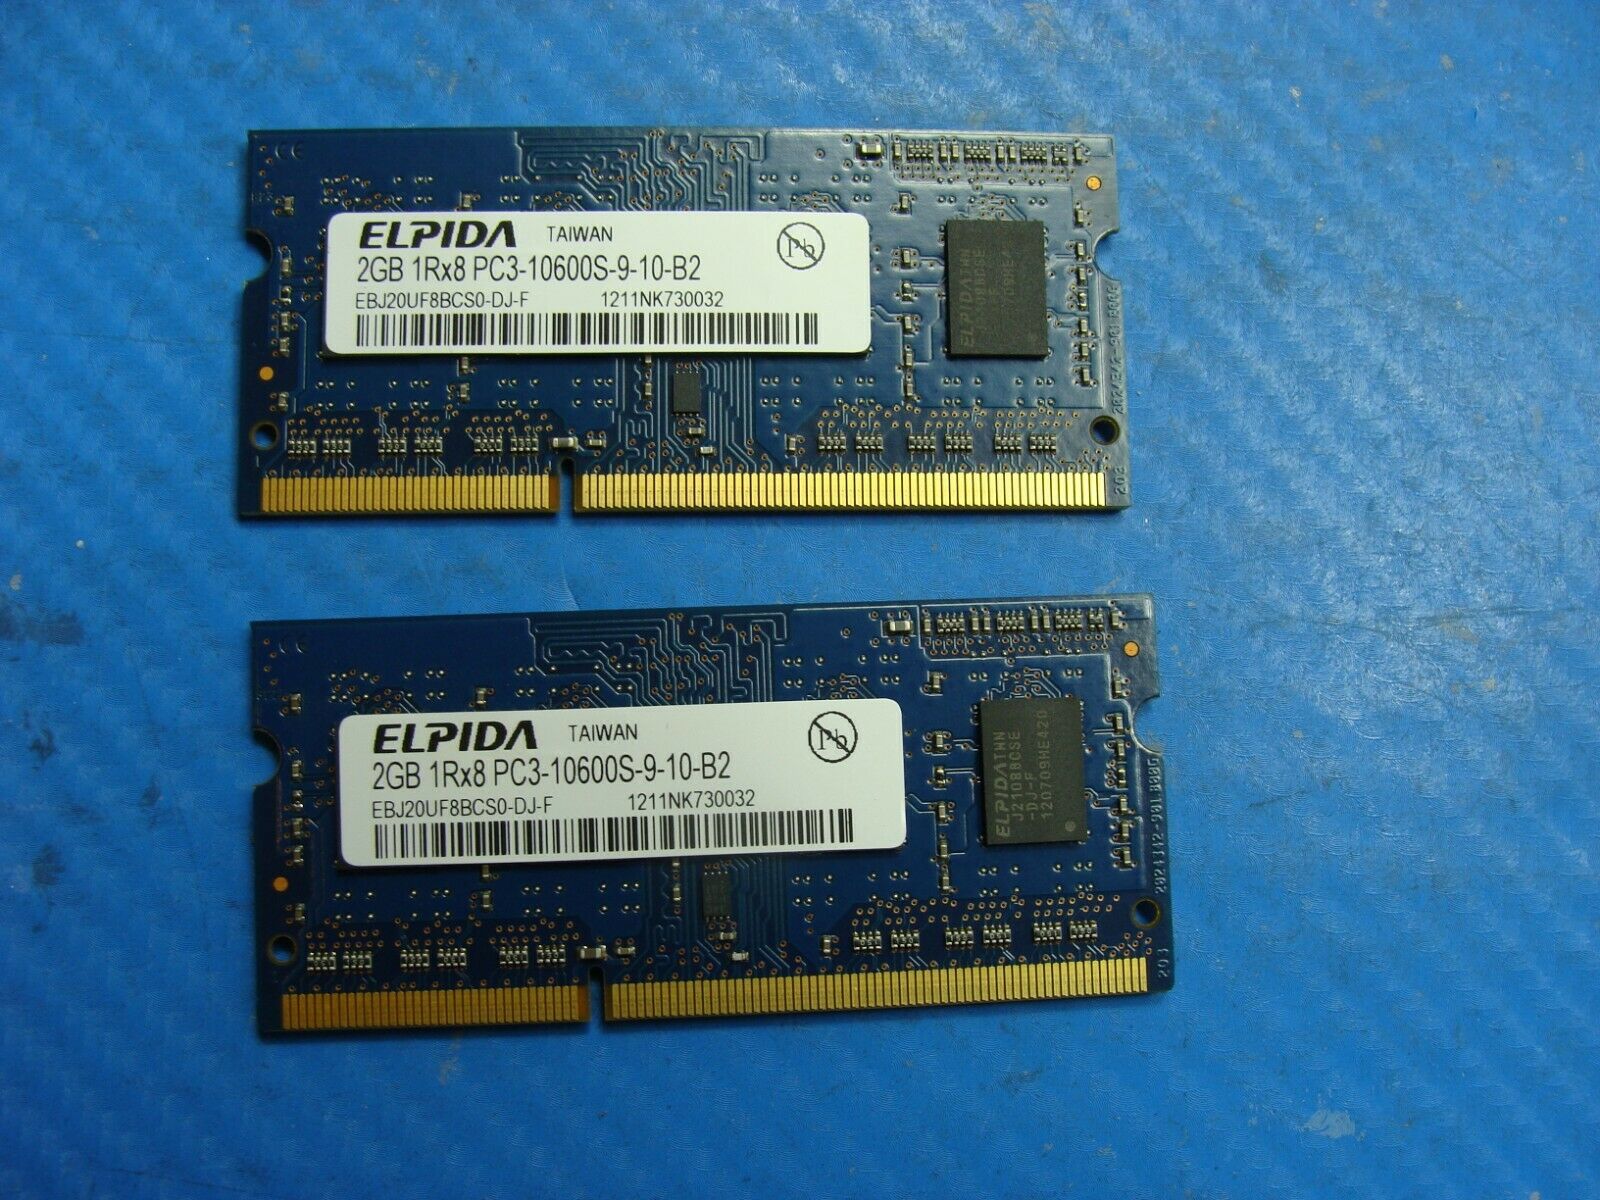 iMac A1311 Elpida 4GB (2x2GB) PC3-10600S SO-DIMM Memory RAM EBJ20UF8BCS0-DJ-F #1 Elpida